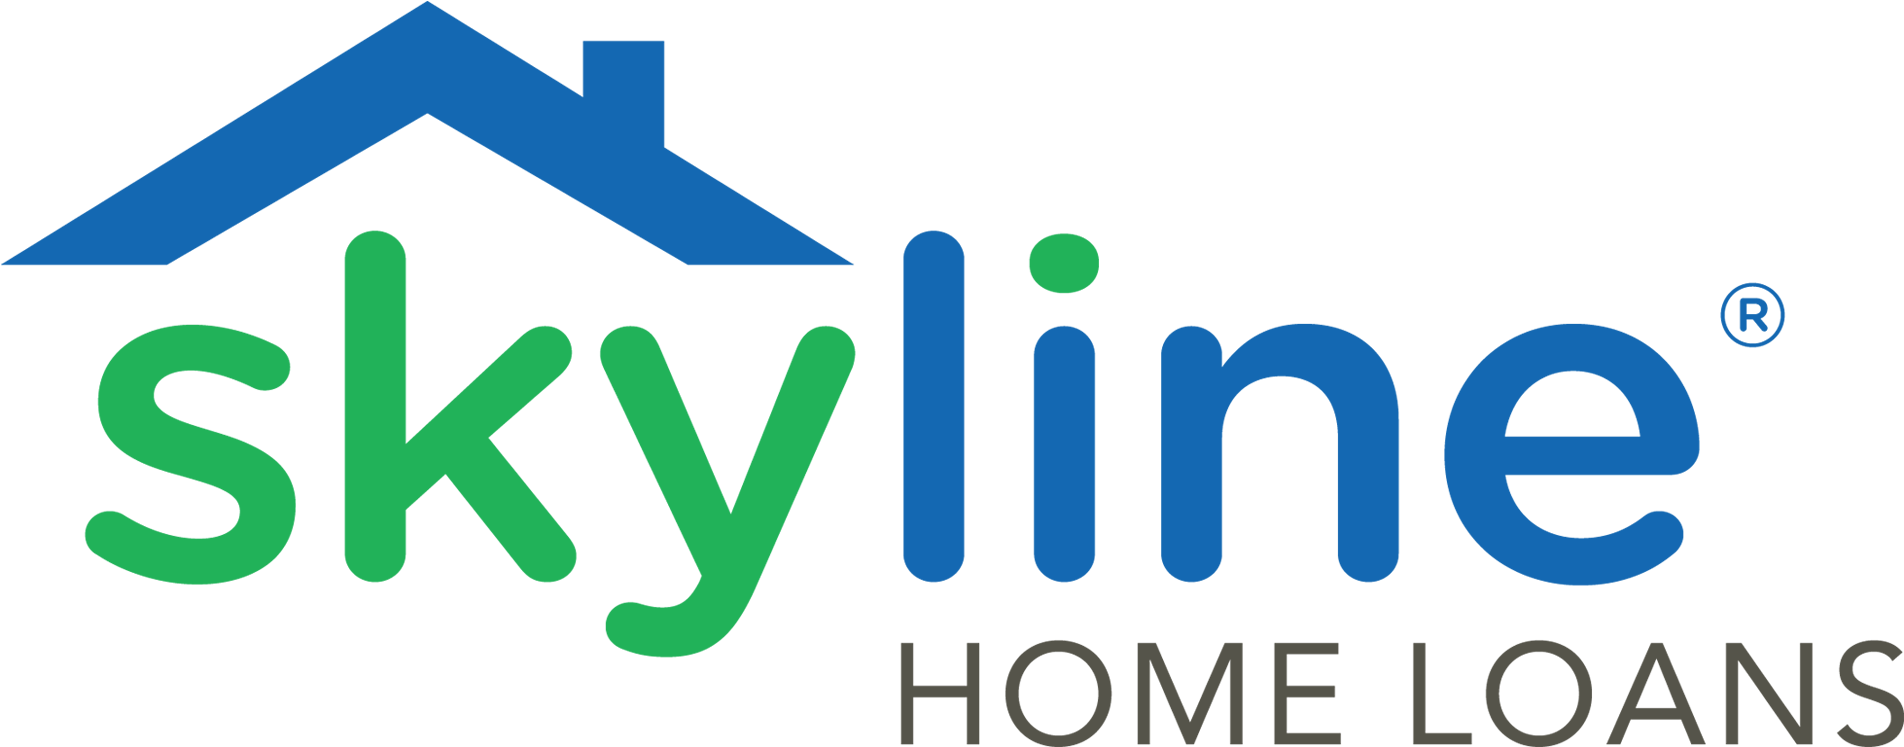 A Mortgage Broker Your Realtor Referred - Skyline Home Loans Glendale (2165x848)